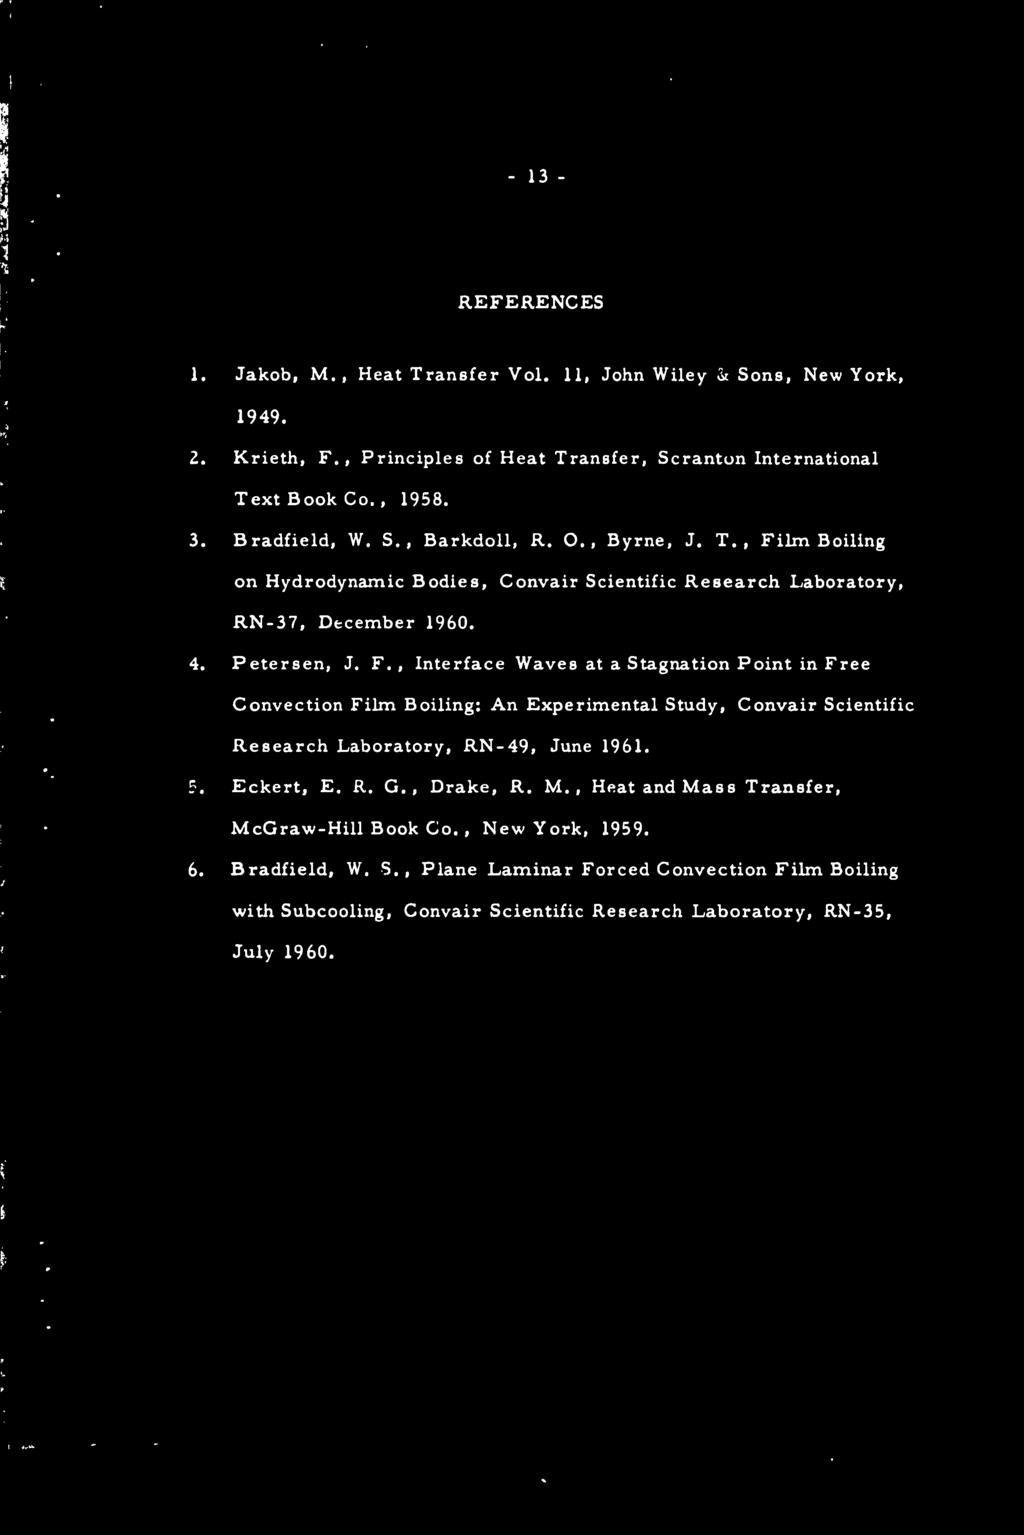 - 13 REFERENCES 1. Jakob, M., Heat Transfer Vol. 11, John Wiley '<k Sons, New York, 1949. 2. Krieth, F., Principles of Heat Transfer, Scranton International Text Book Co., 1958. 3. Bradfield, W. S., Barkdoll, R.